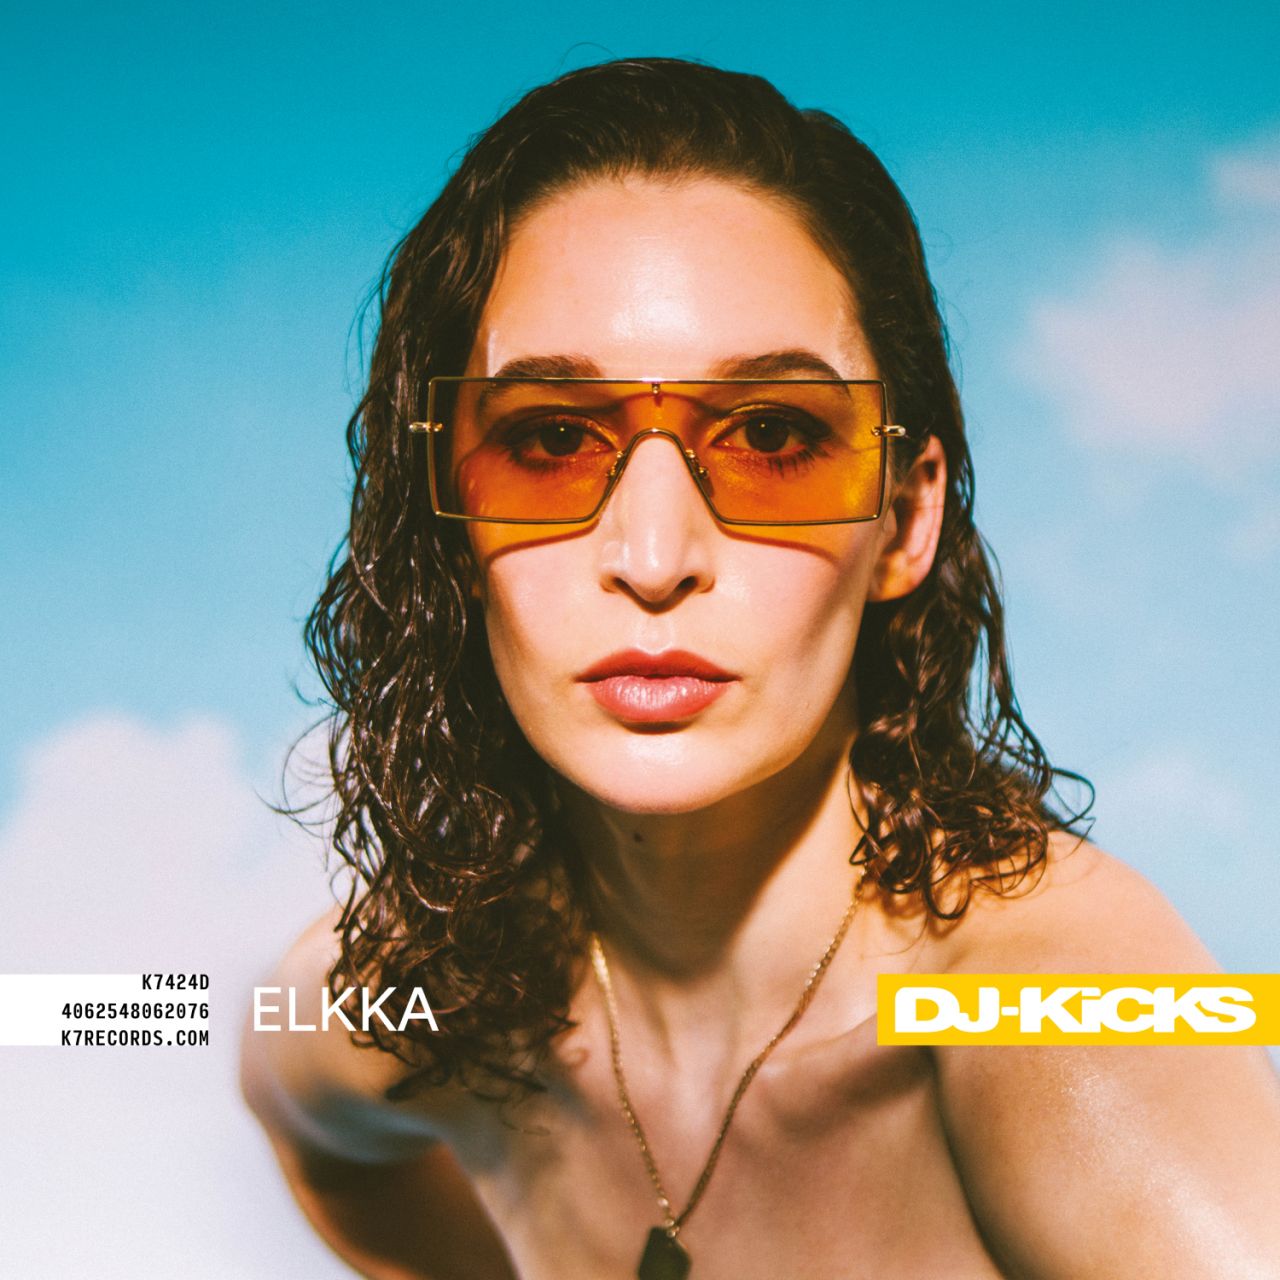 Elkka - DJ Kicks - CD